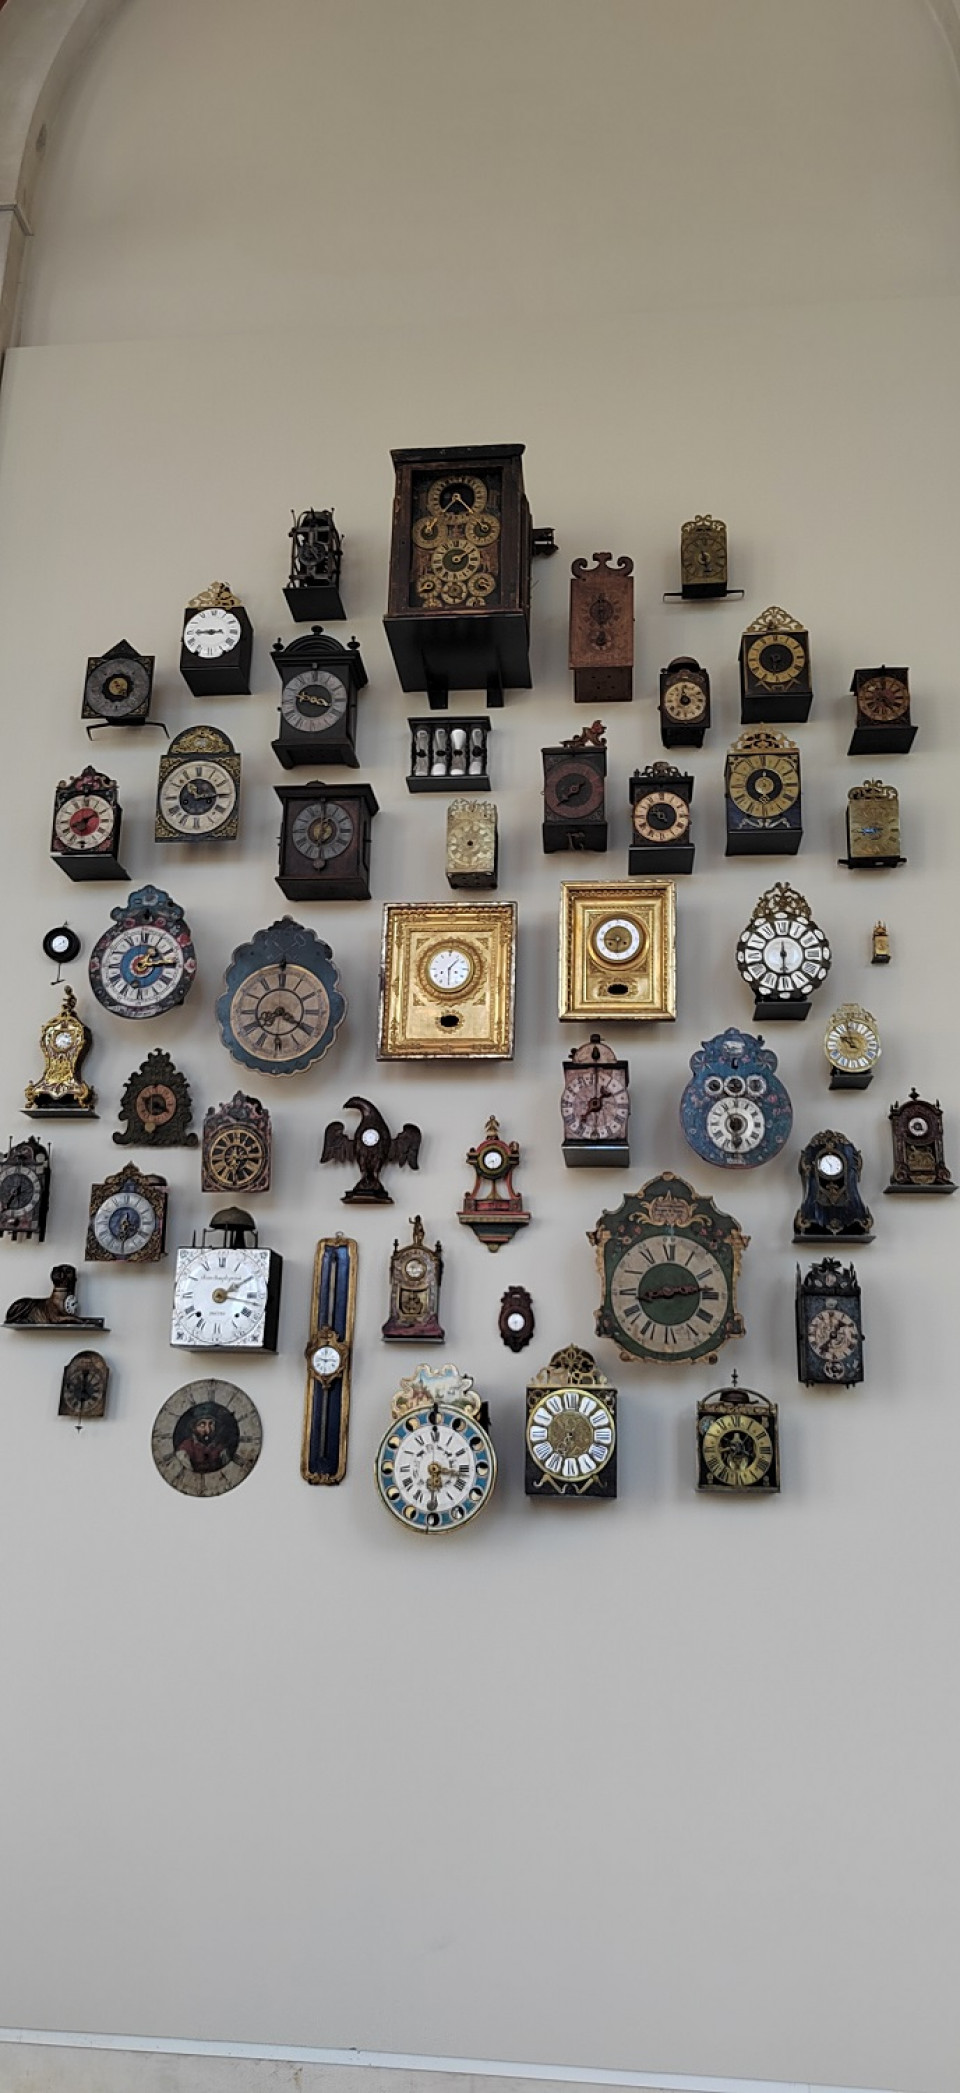 Exposicion de relojeria en el Museo de Arte e Historia de Ginebra@Carmen Pineda